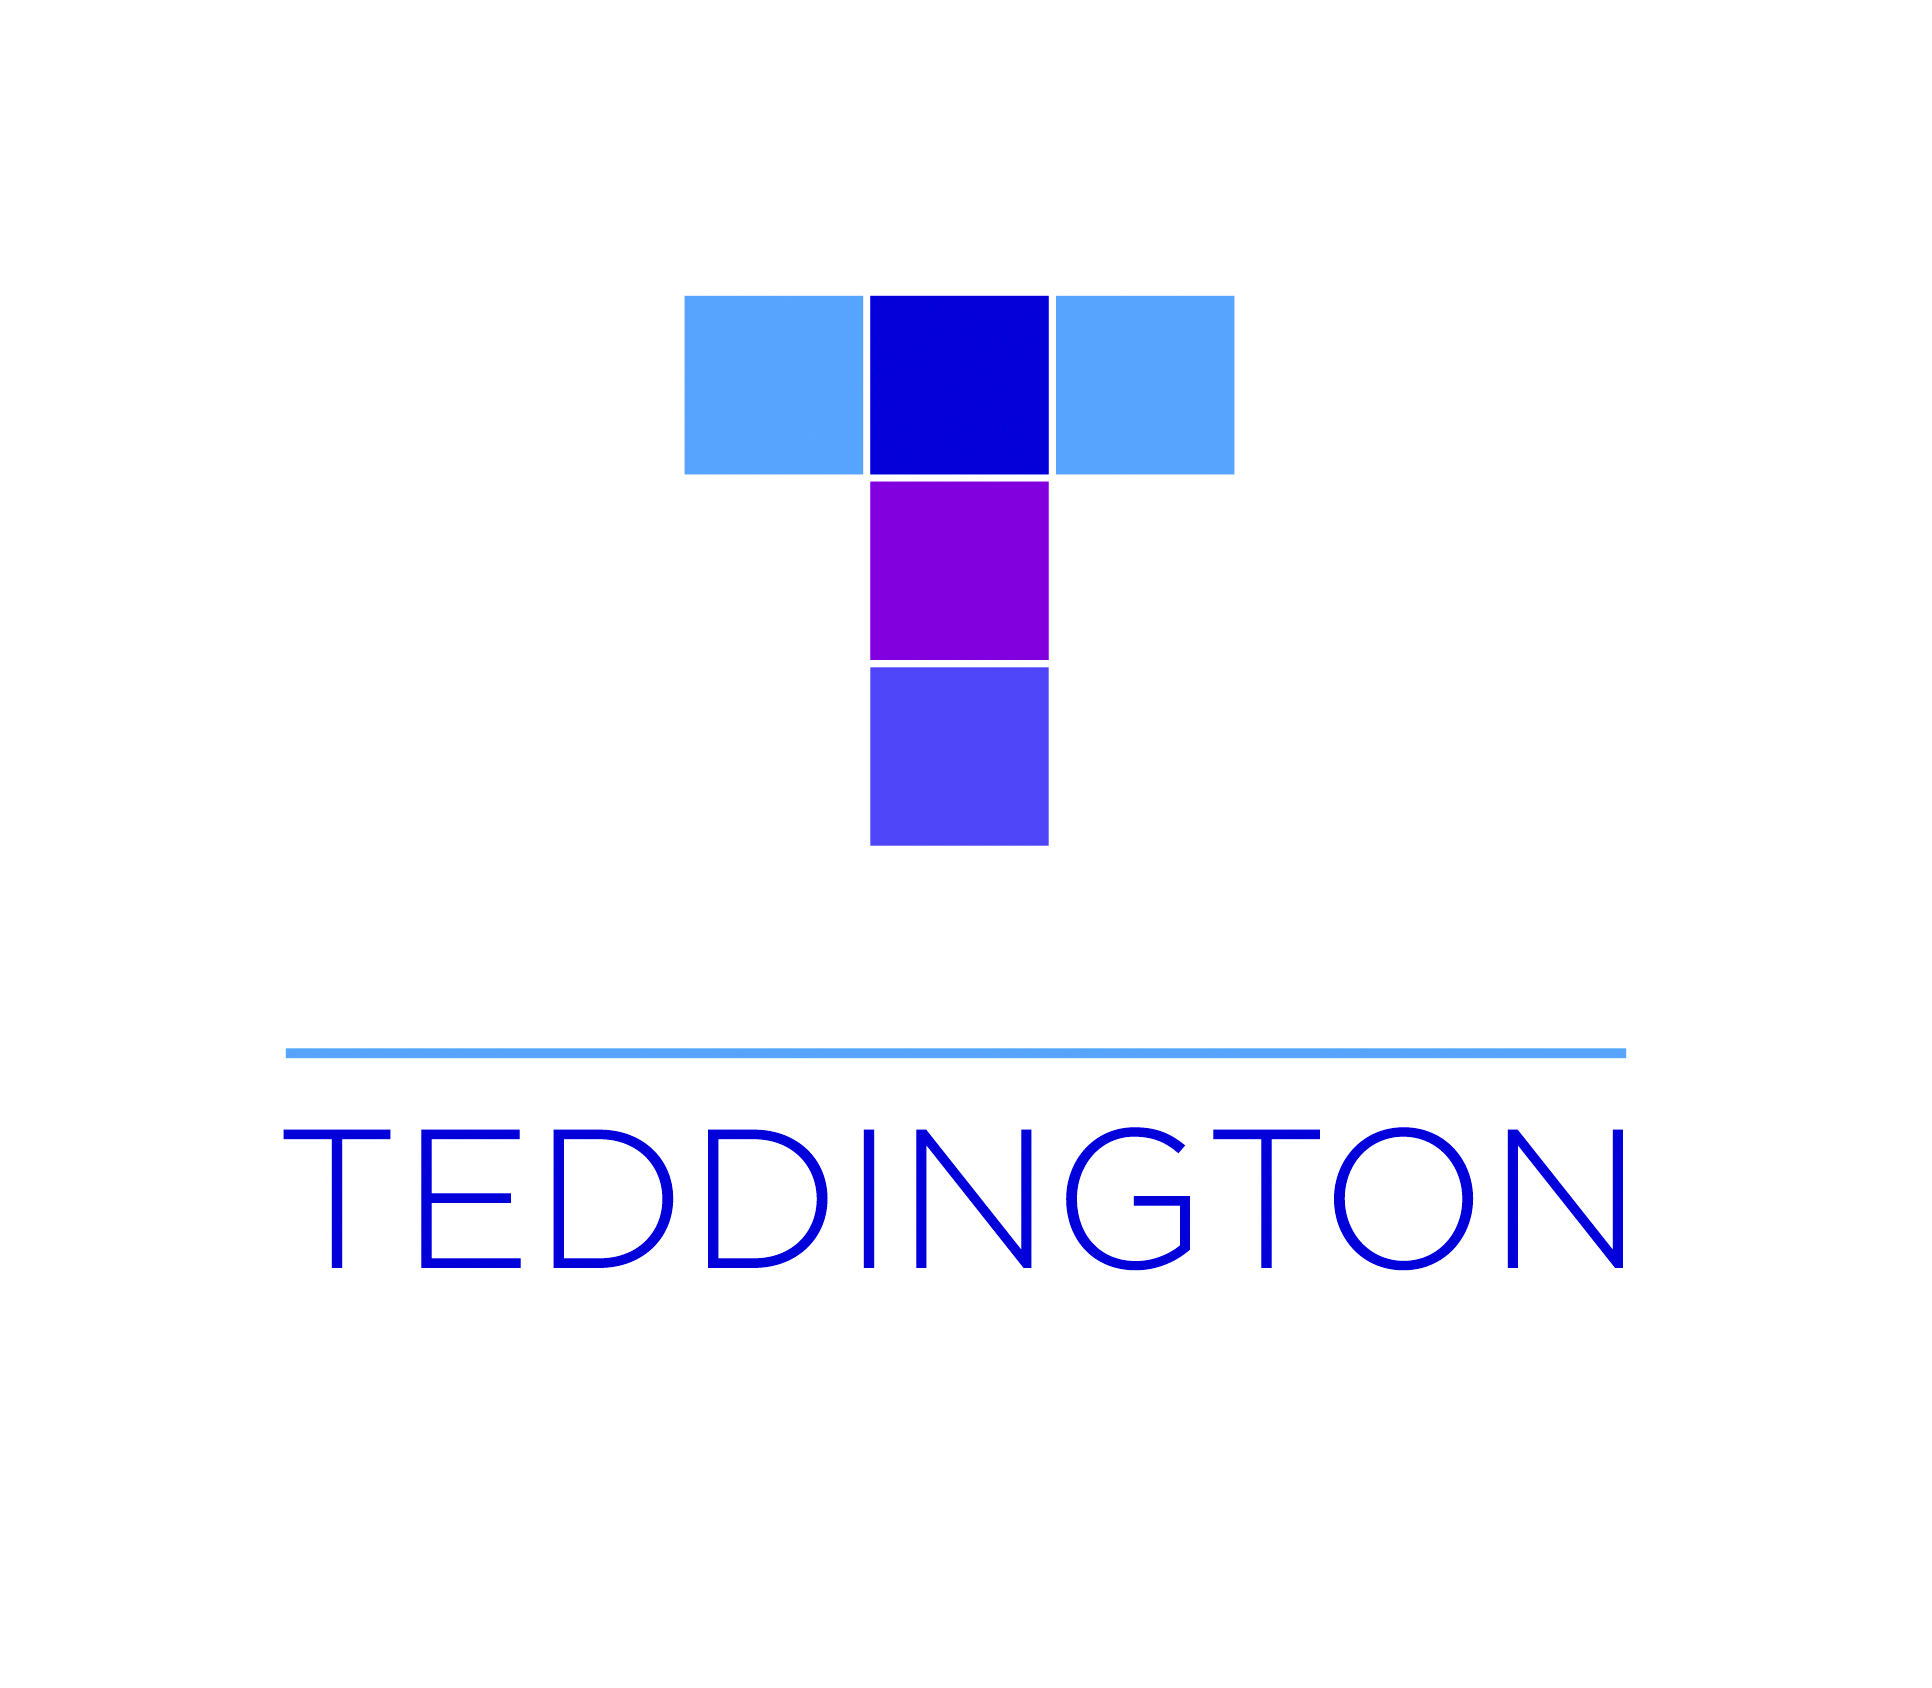 Teddington - engineering at its best